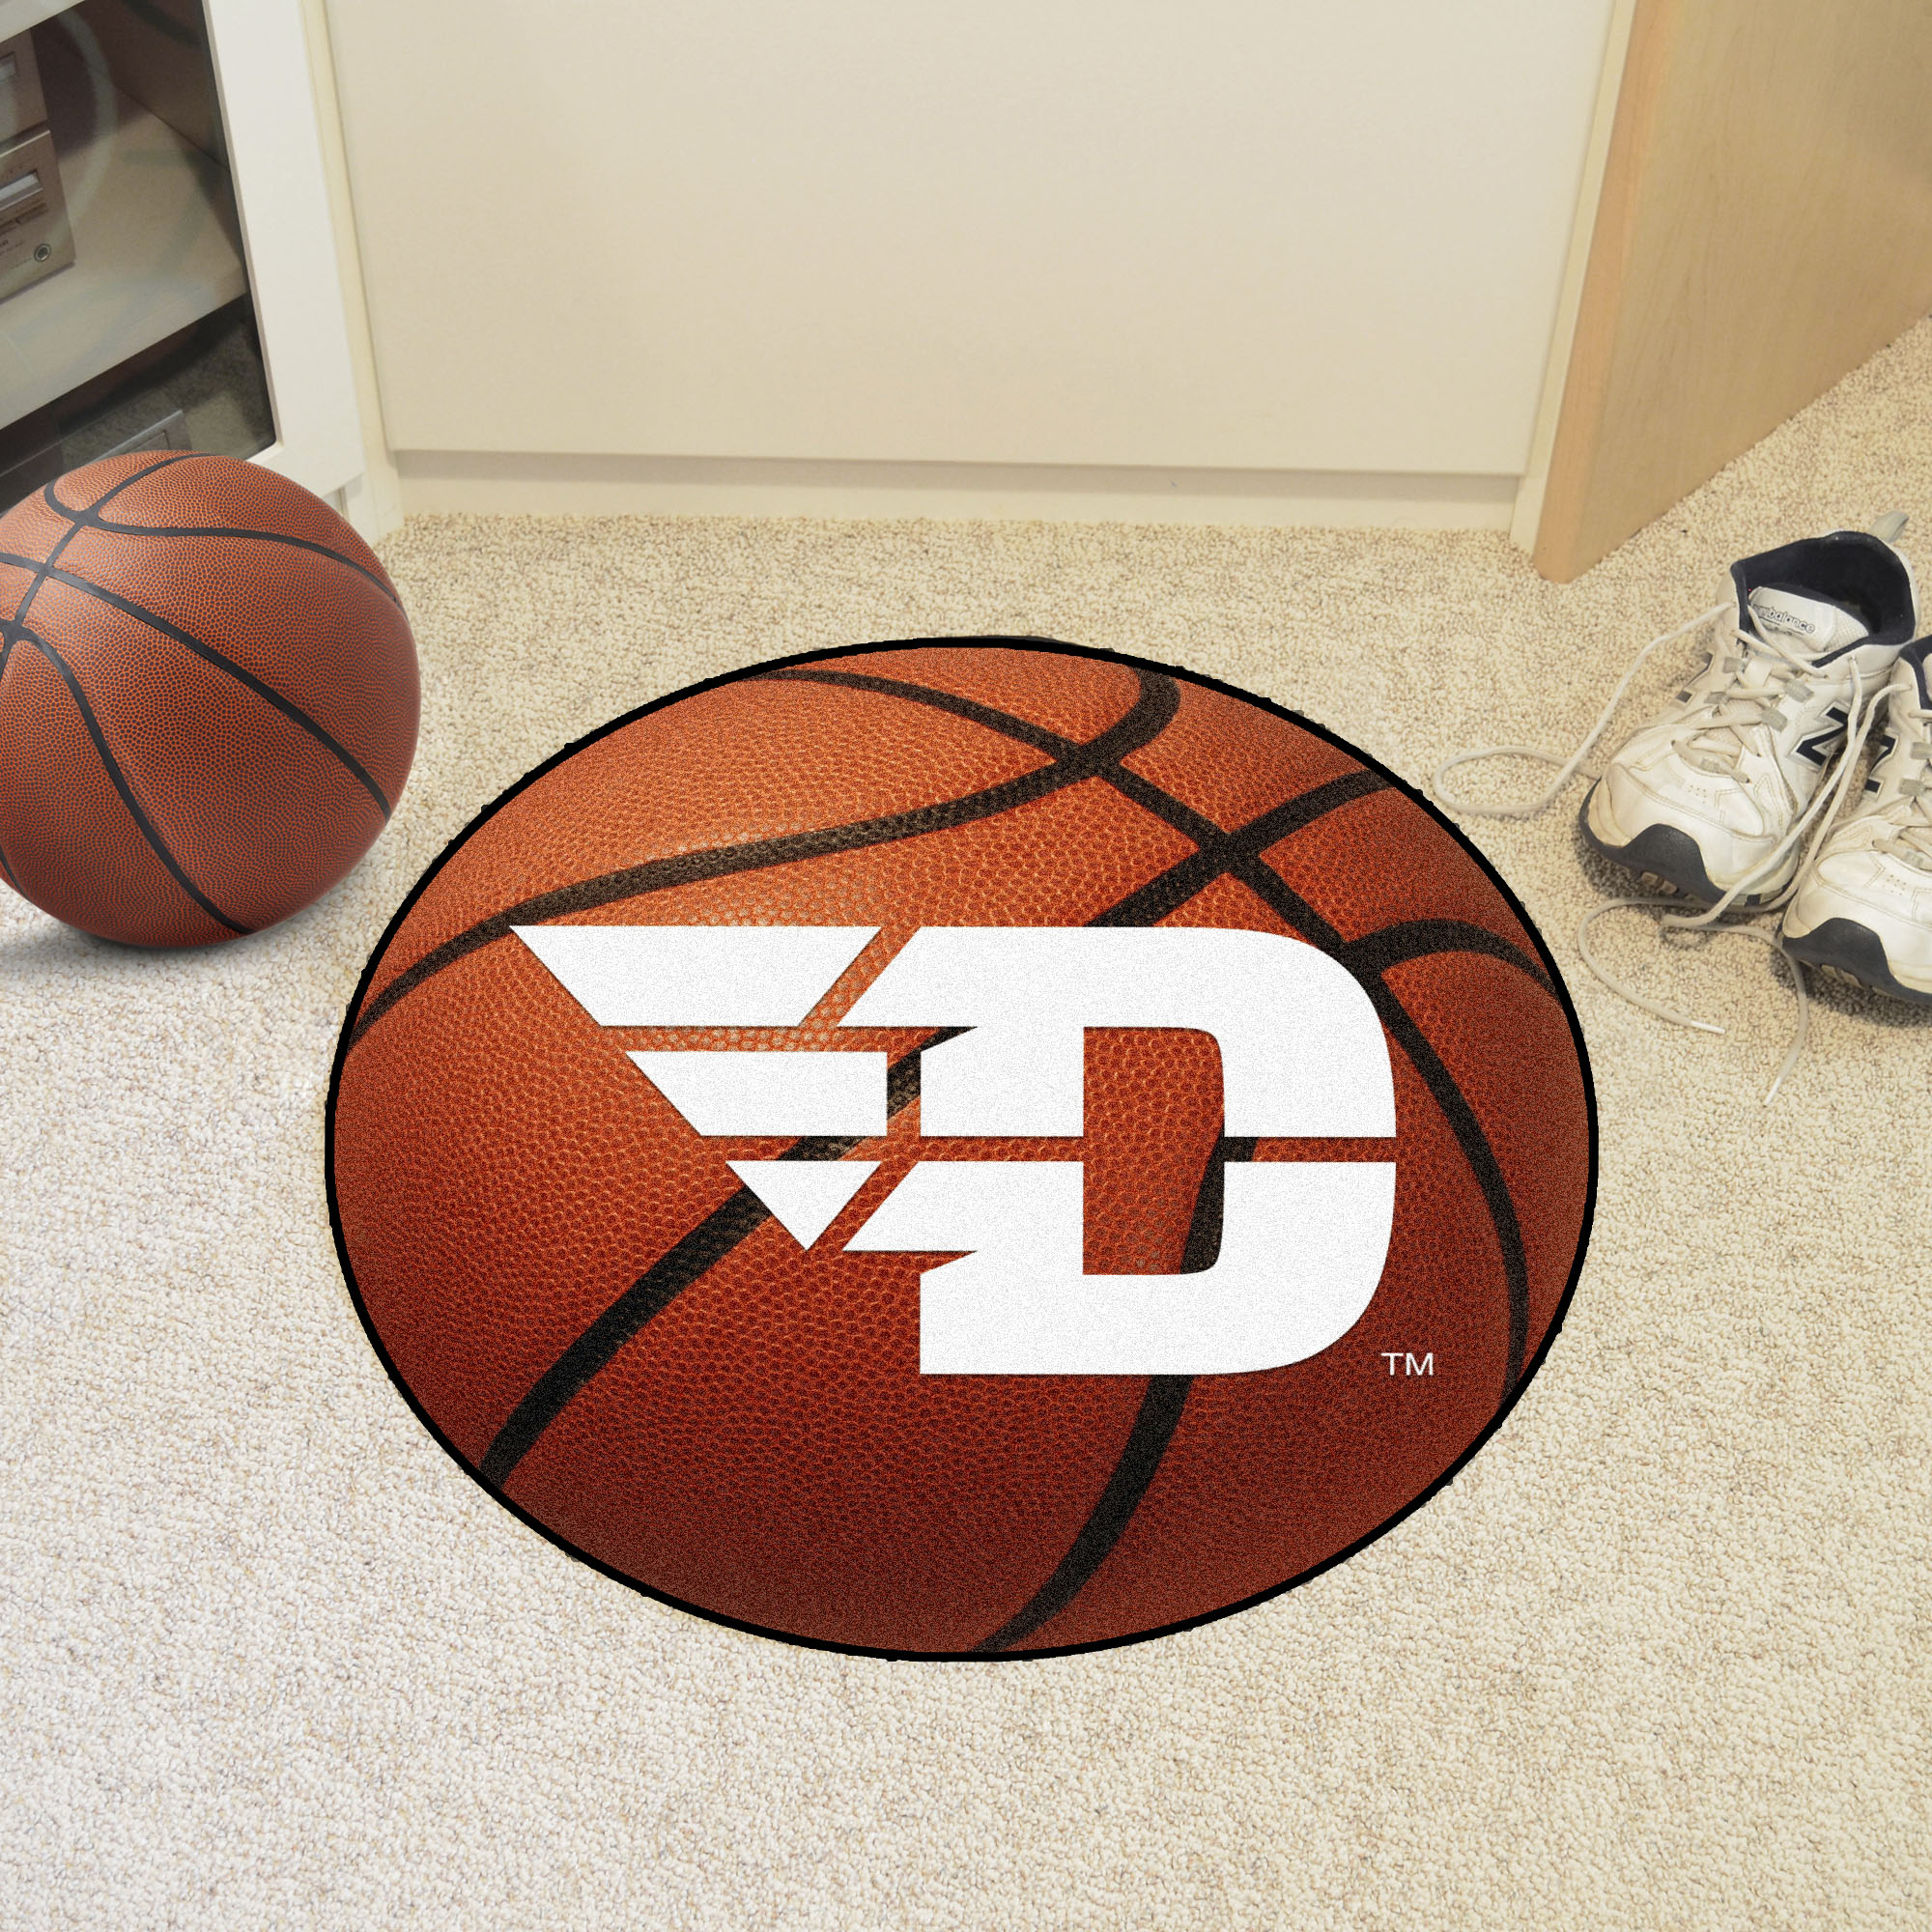 University of Dayton Ball Shaped Area rugs (Ball Shaped Area Rugs: Basketball)